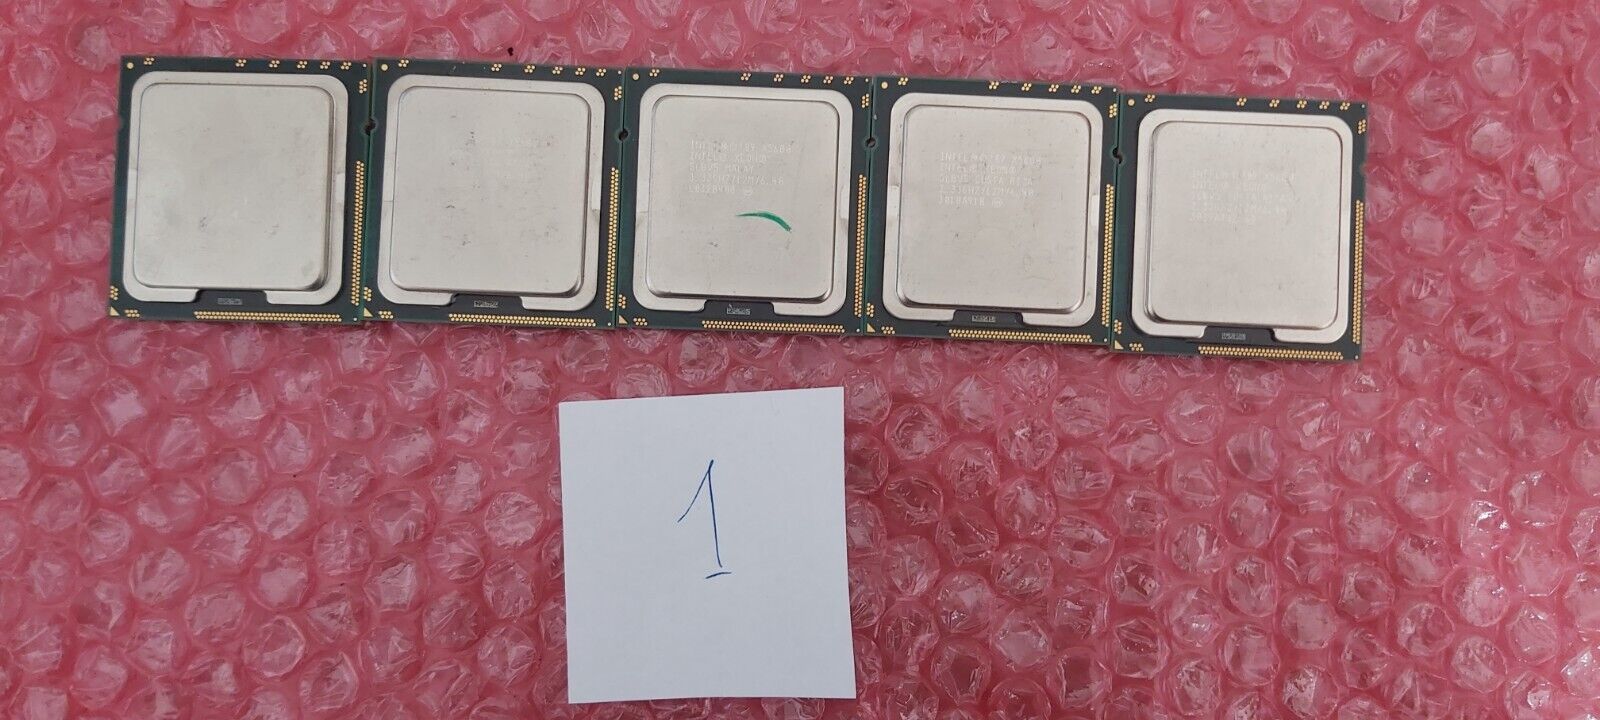 Lot of 5 Intel Xeon X5680 Server CPU Make Offer